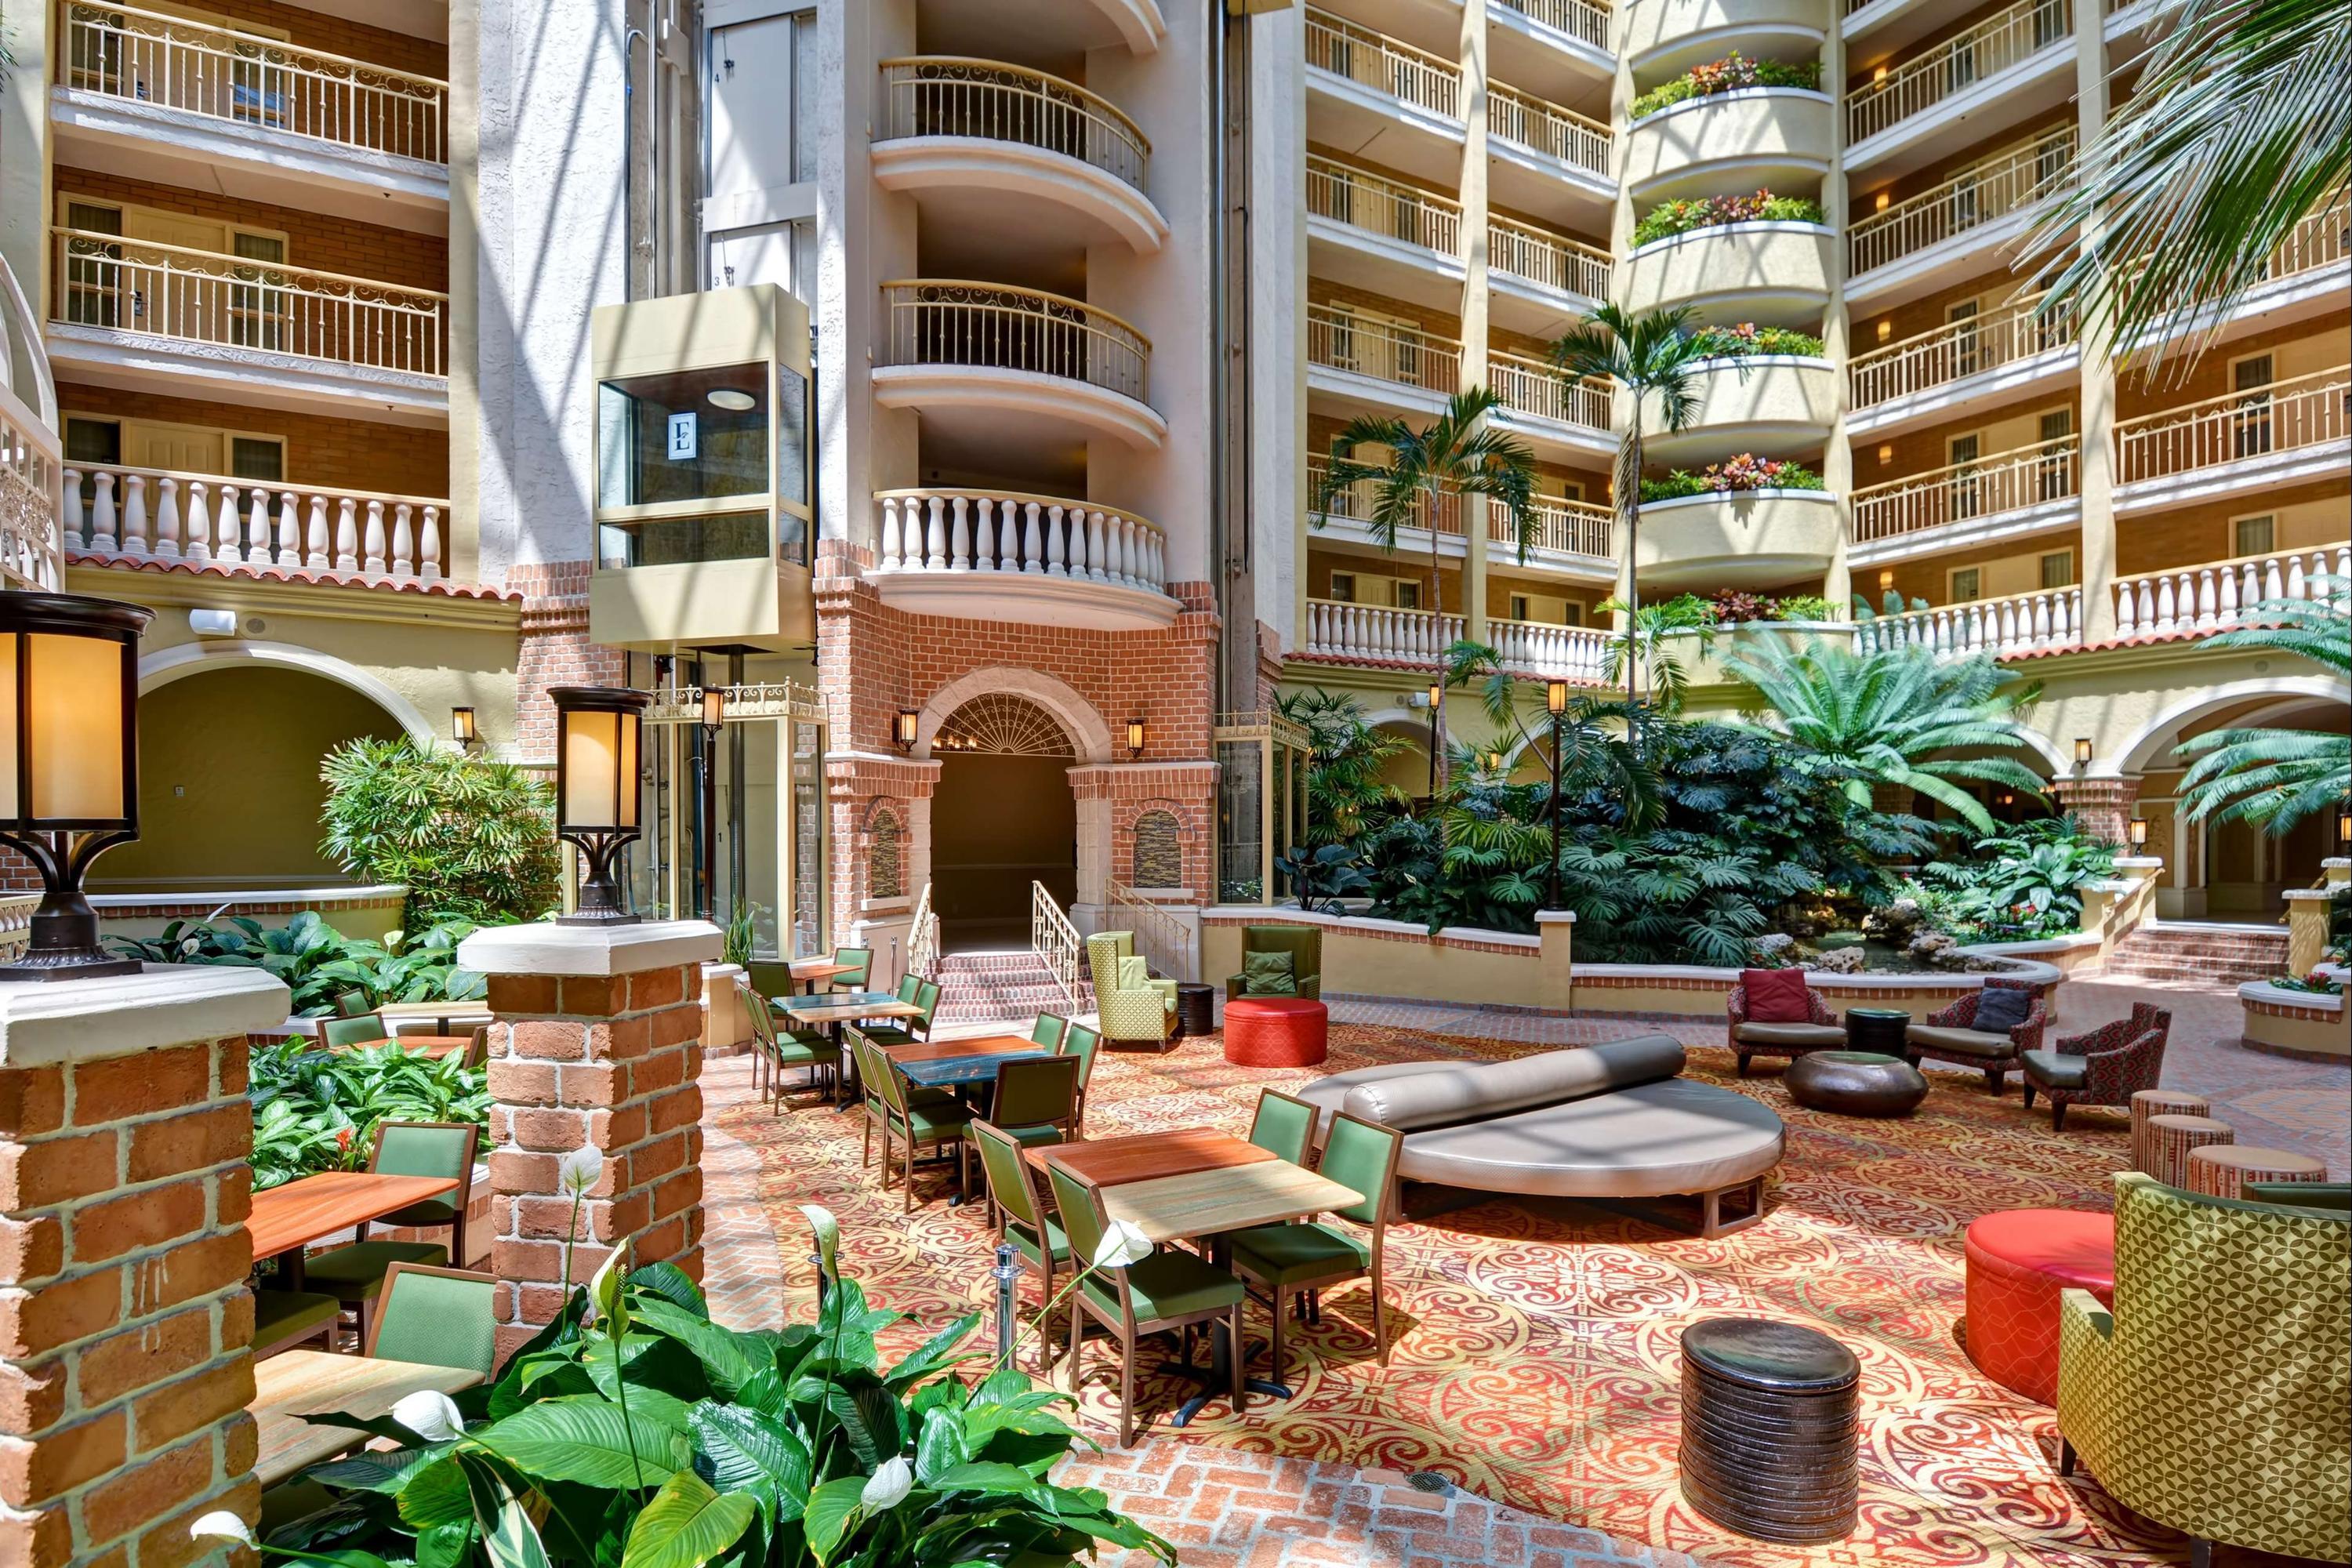 Deserted & Vandalized: Inside Southfield's Embassy Suites Hotel